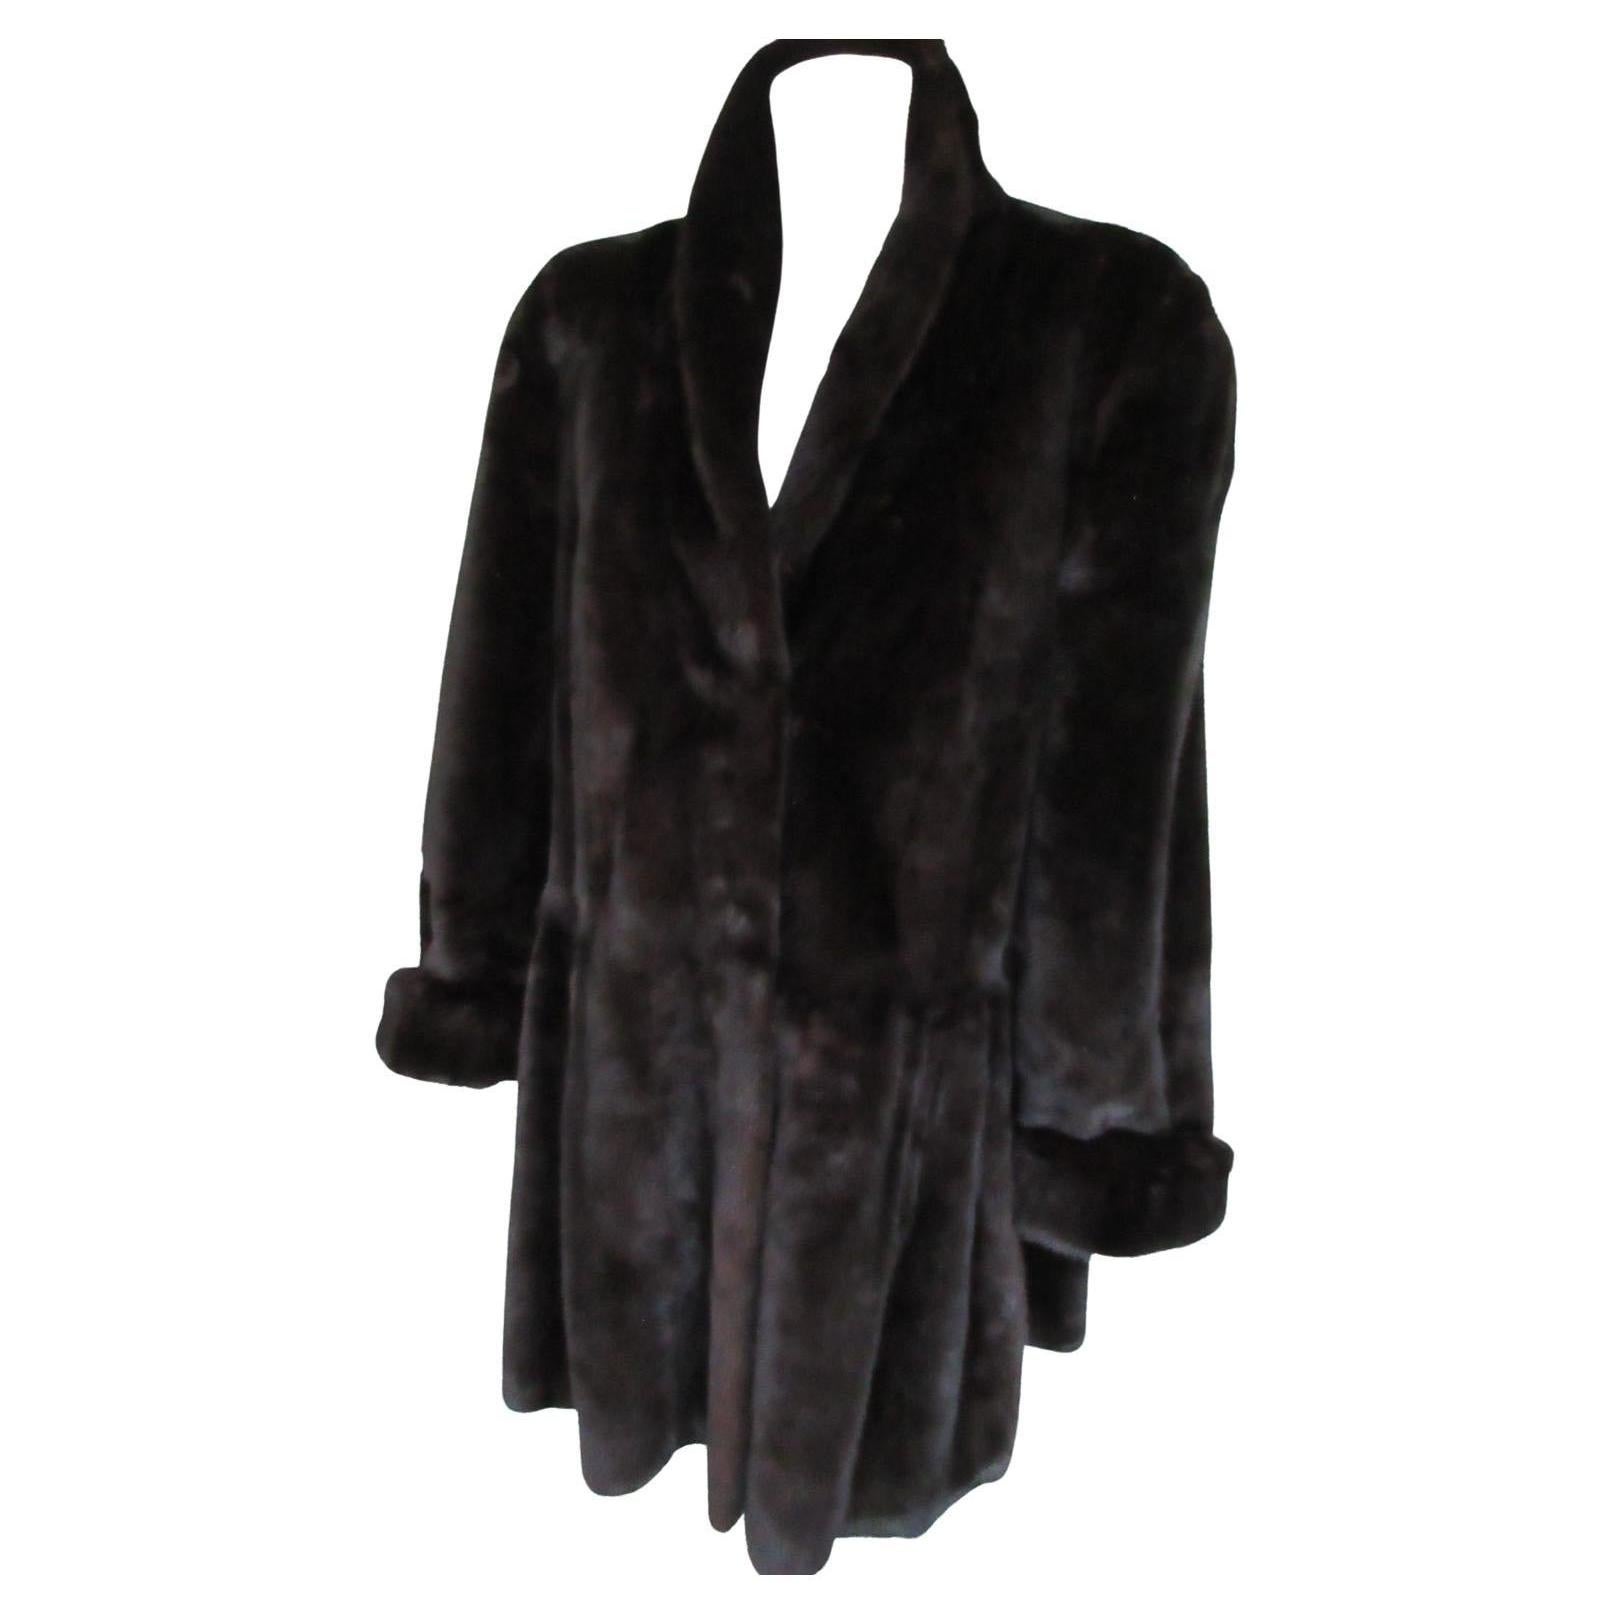 Exceptional Flared Brown Mink Fur Coat 